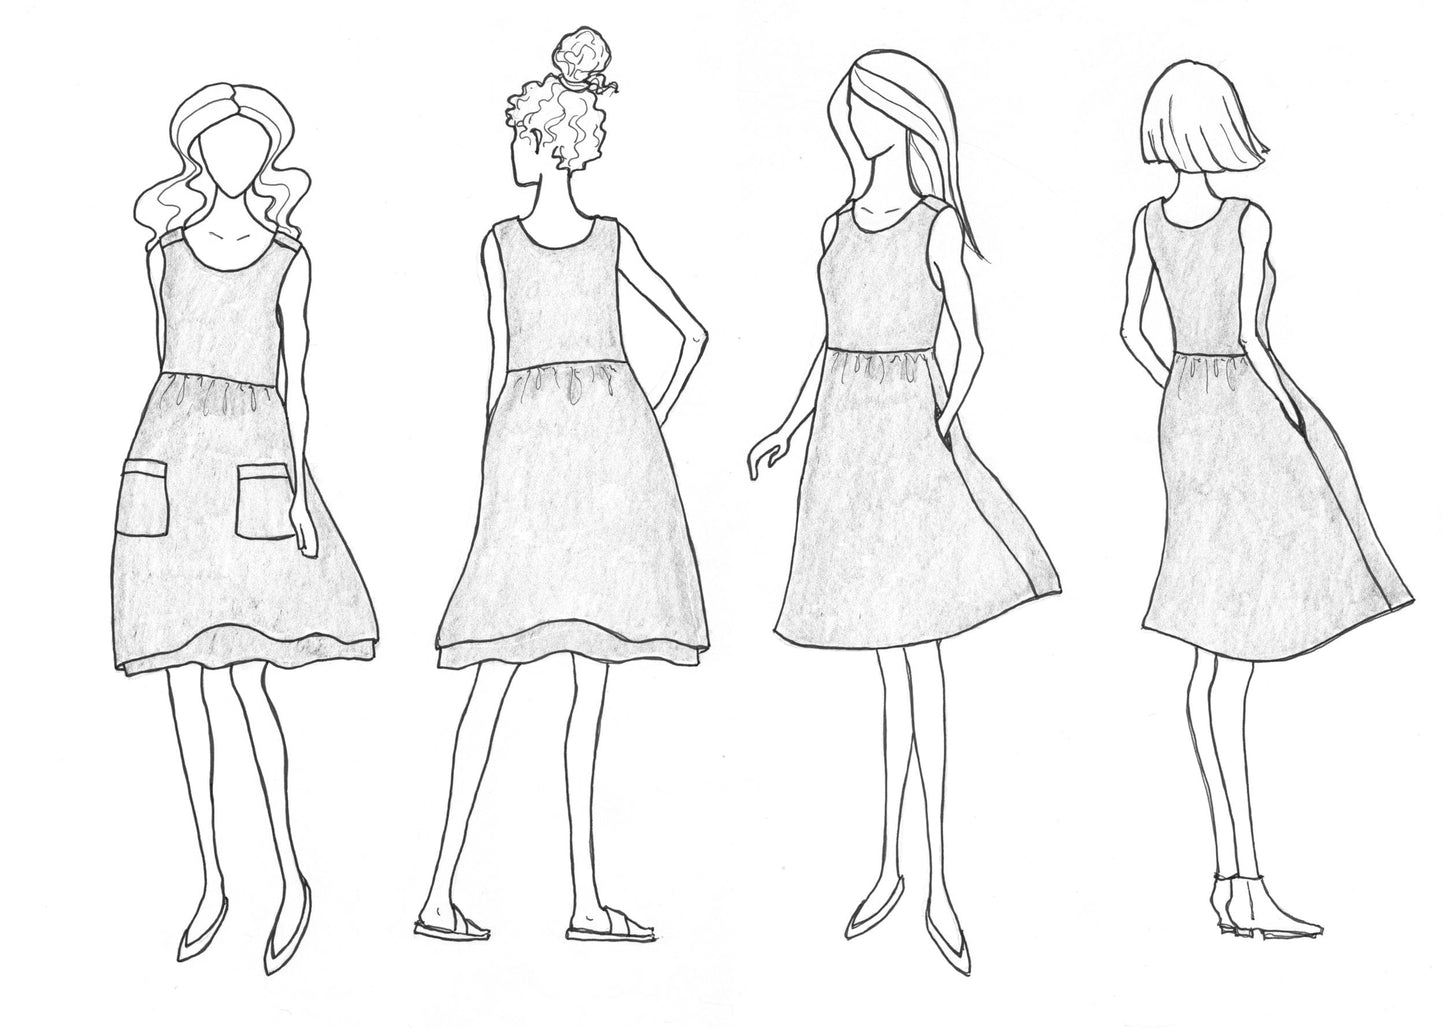 Sew Liberated: Metamorphic Dress